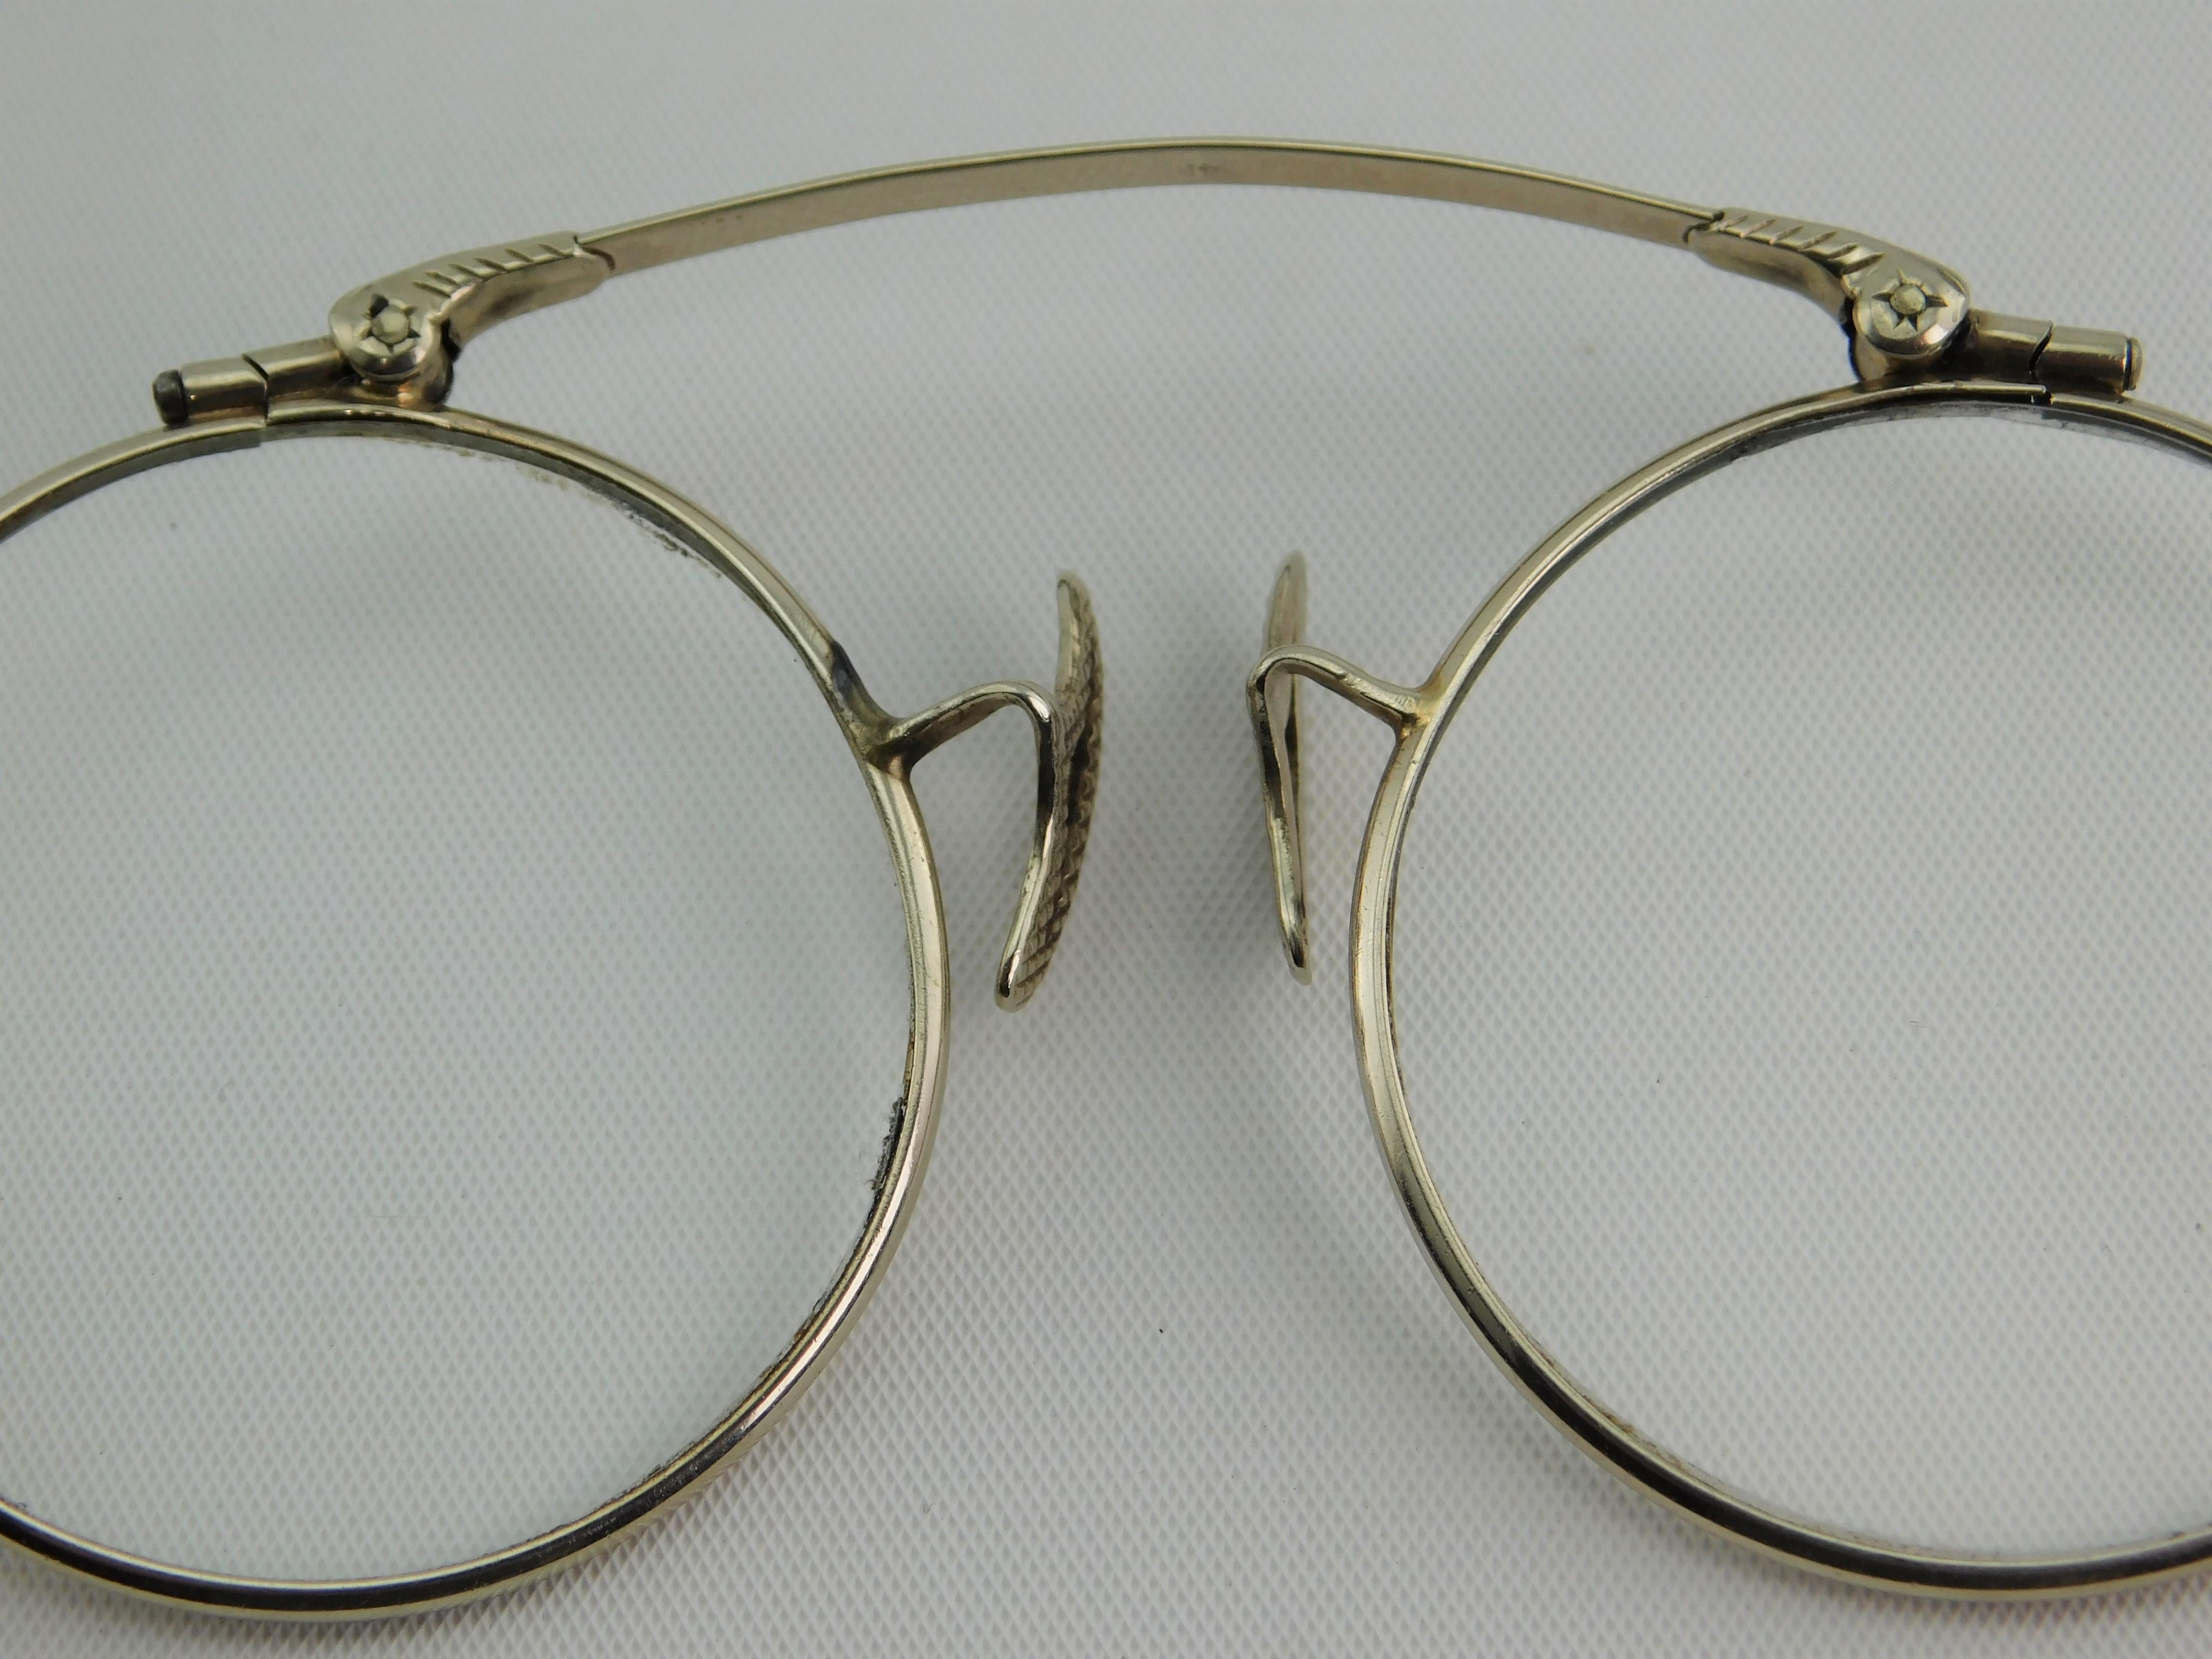 Antique 14K Gold Victorian Vintage Spectacles Lorgnette Eyeglasses with Handle For Sale 1